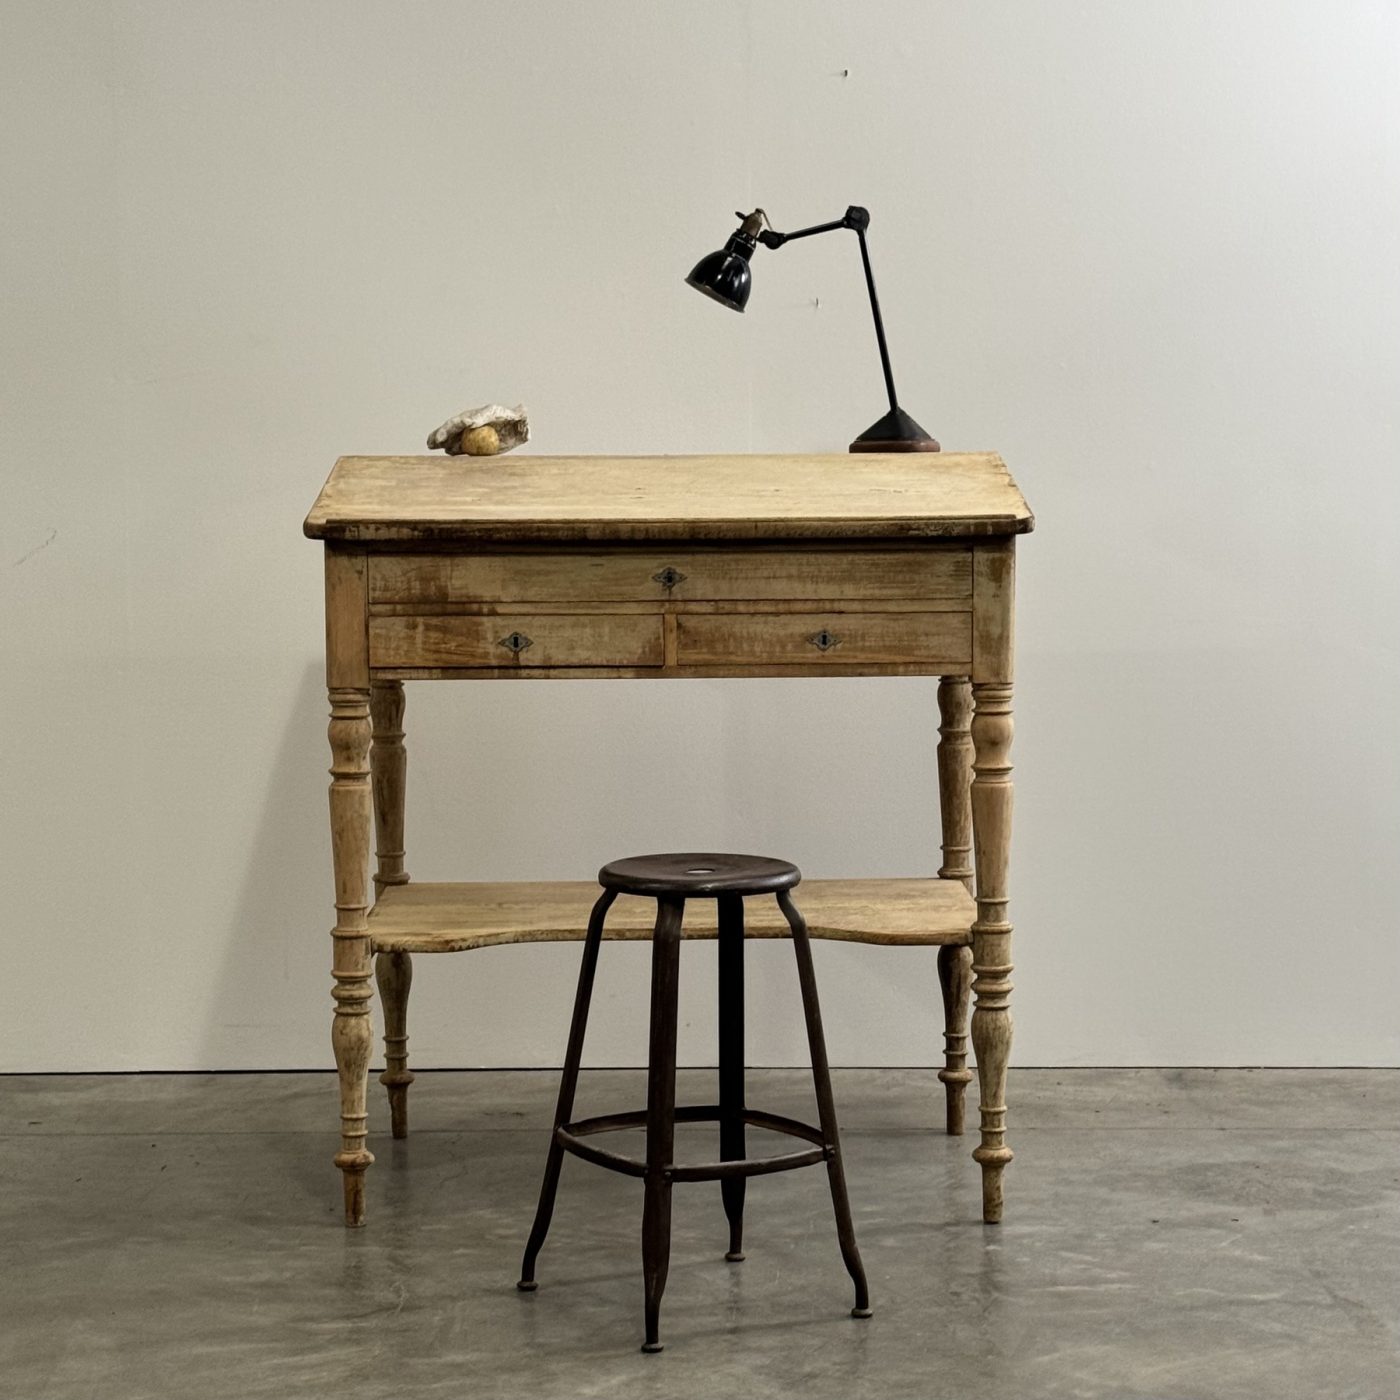 objet-vagabond-painted-desk0001